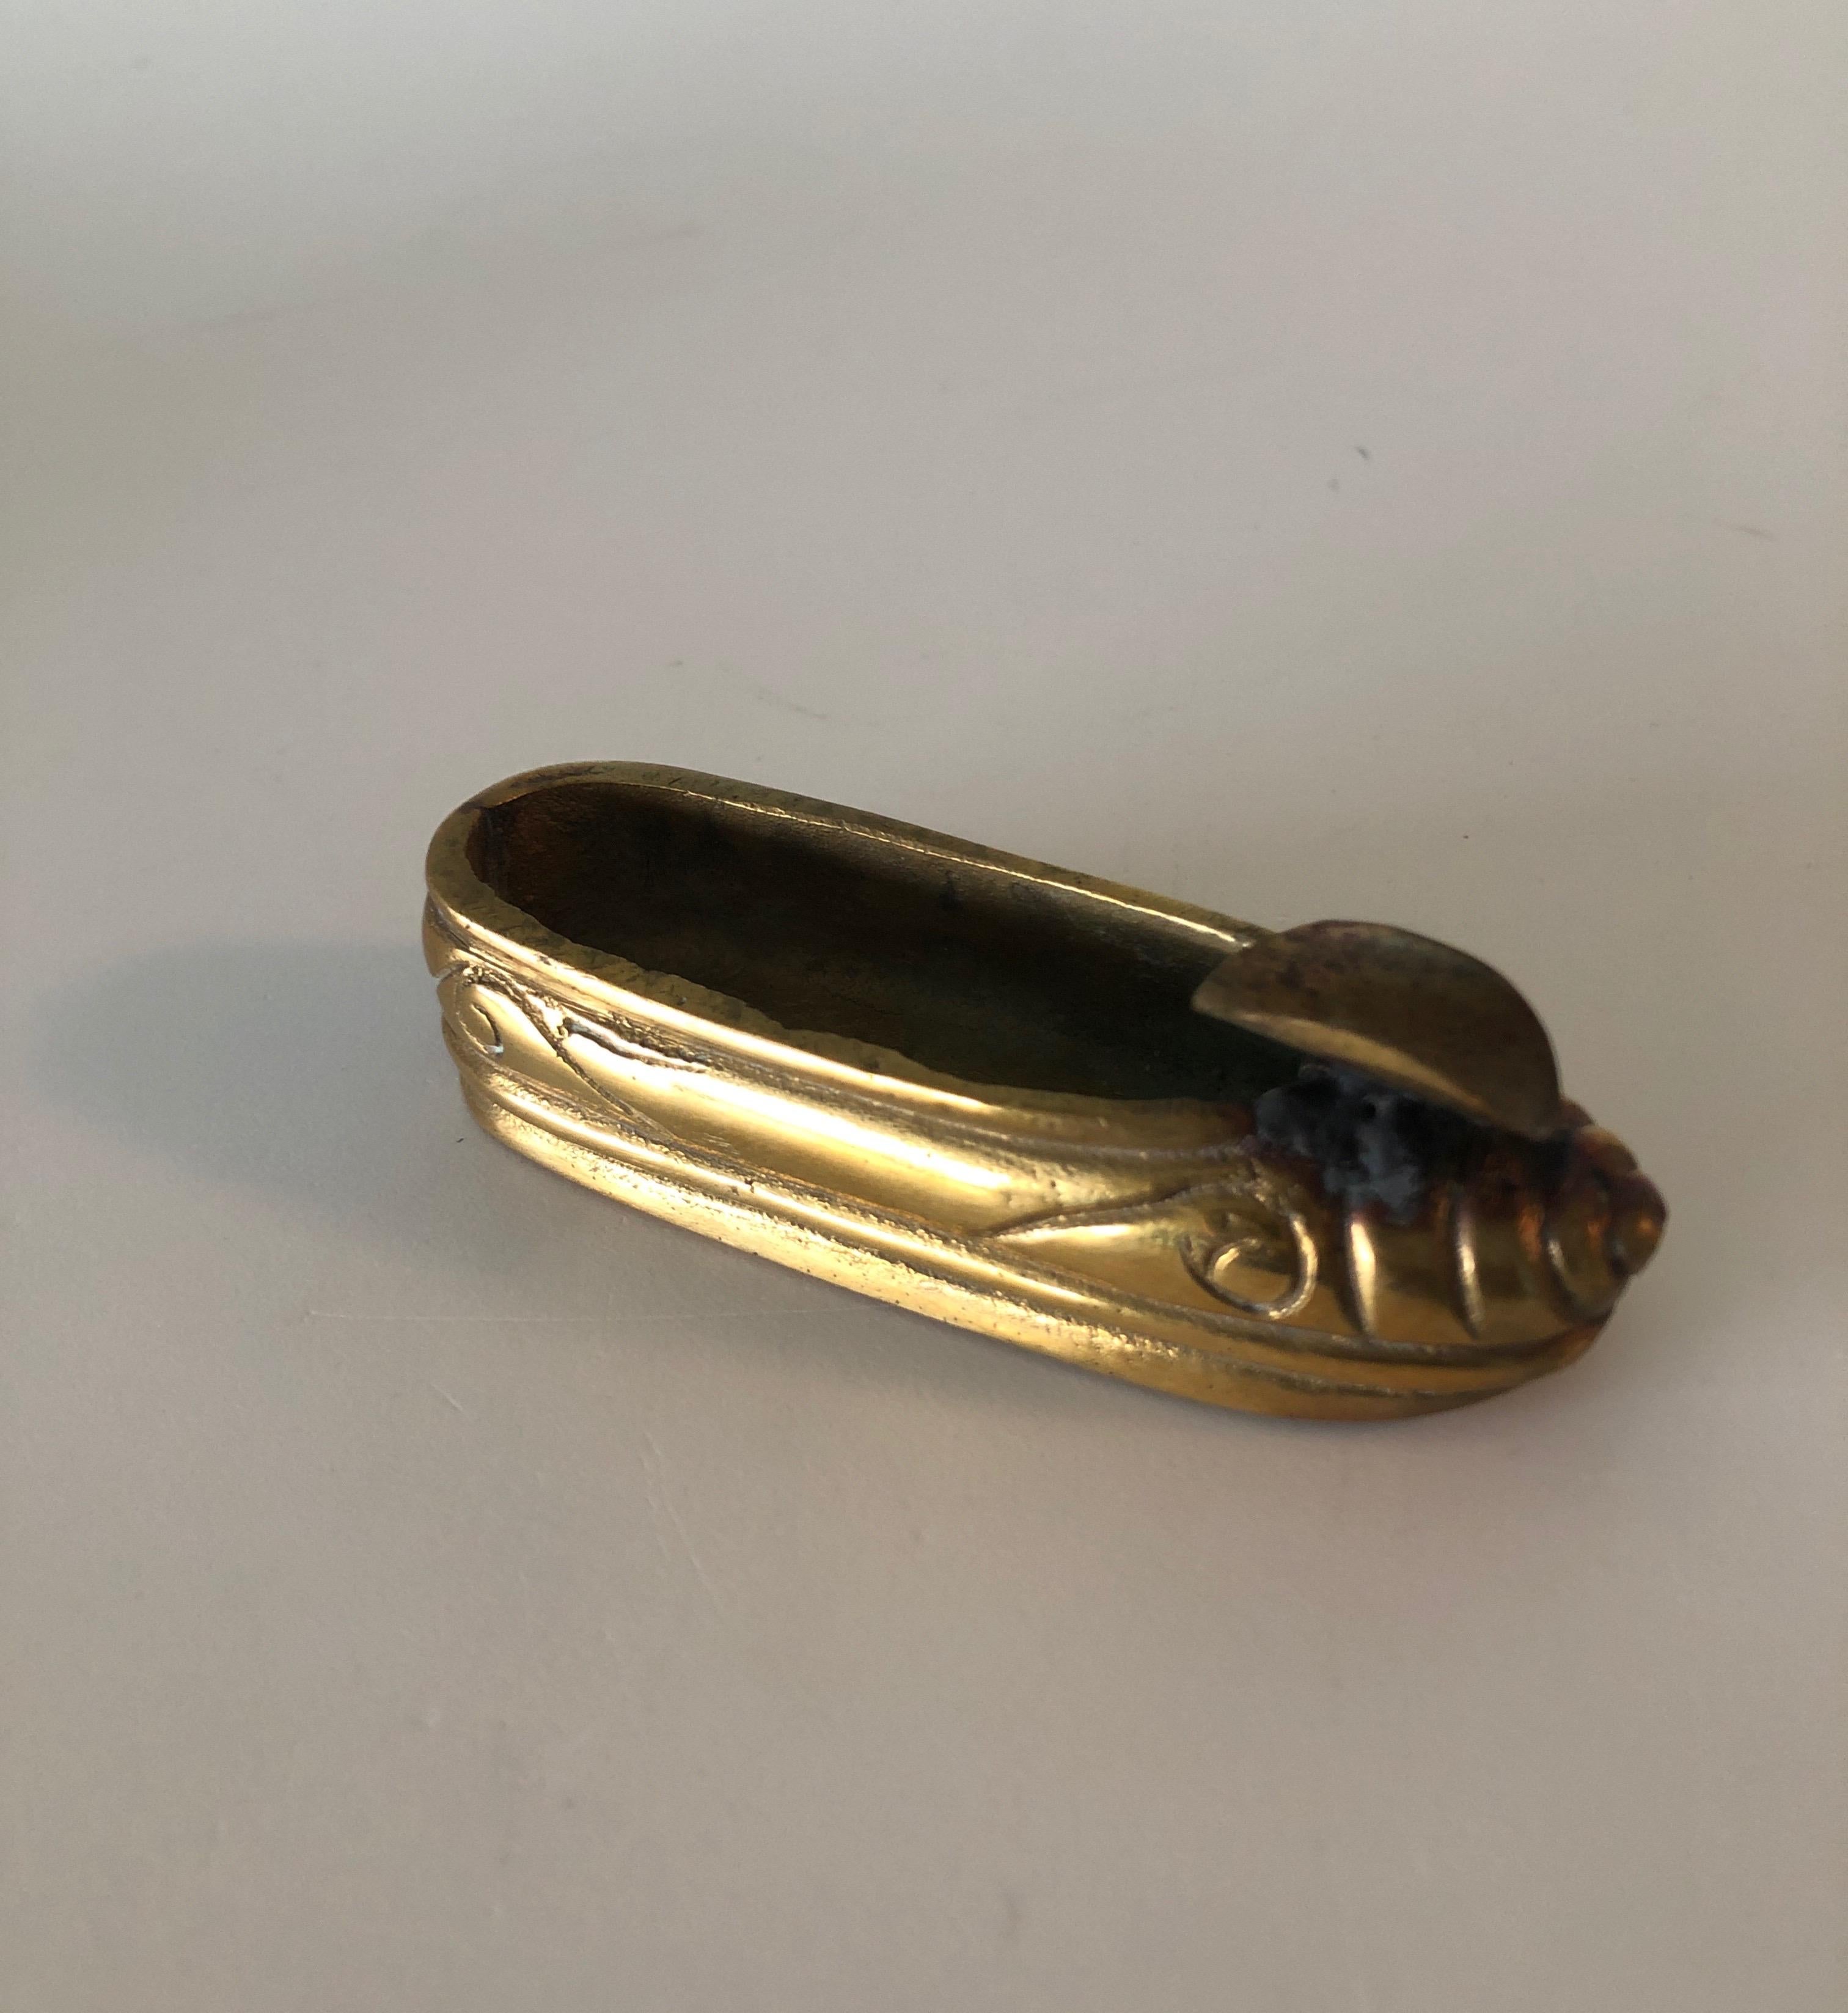 Vintage small brass Ballerina slipper ashtray.
Size: 3.5